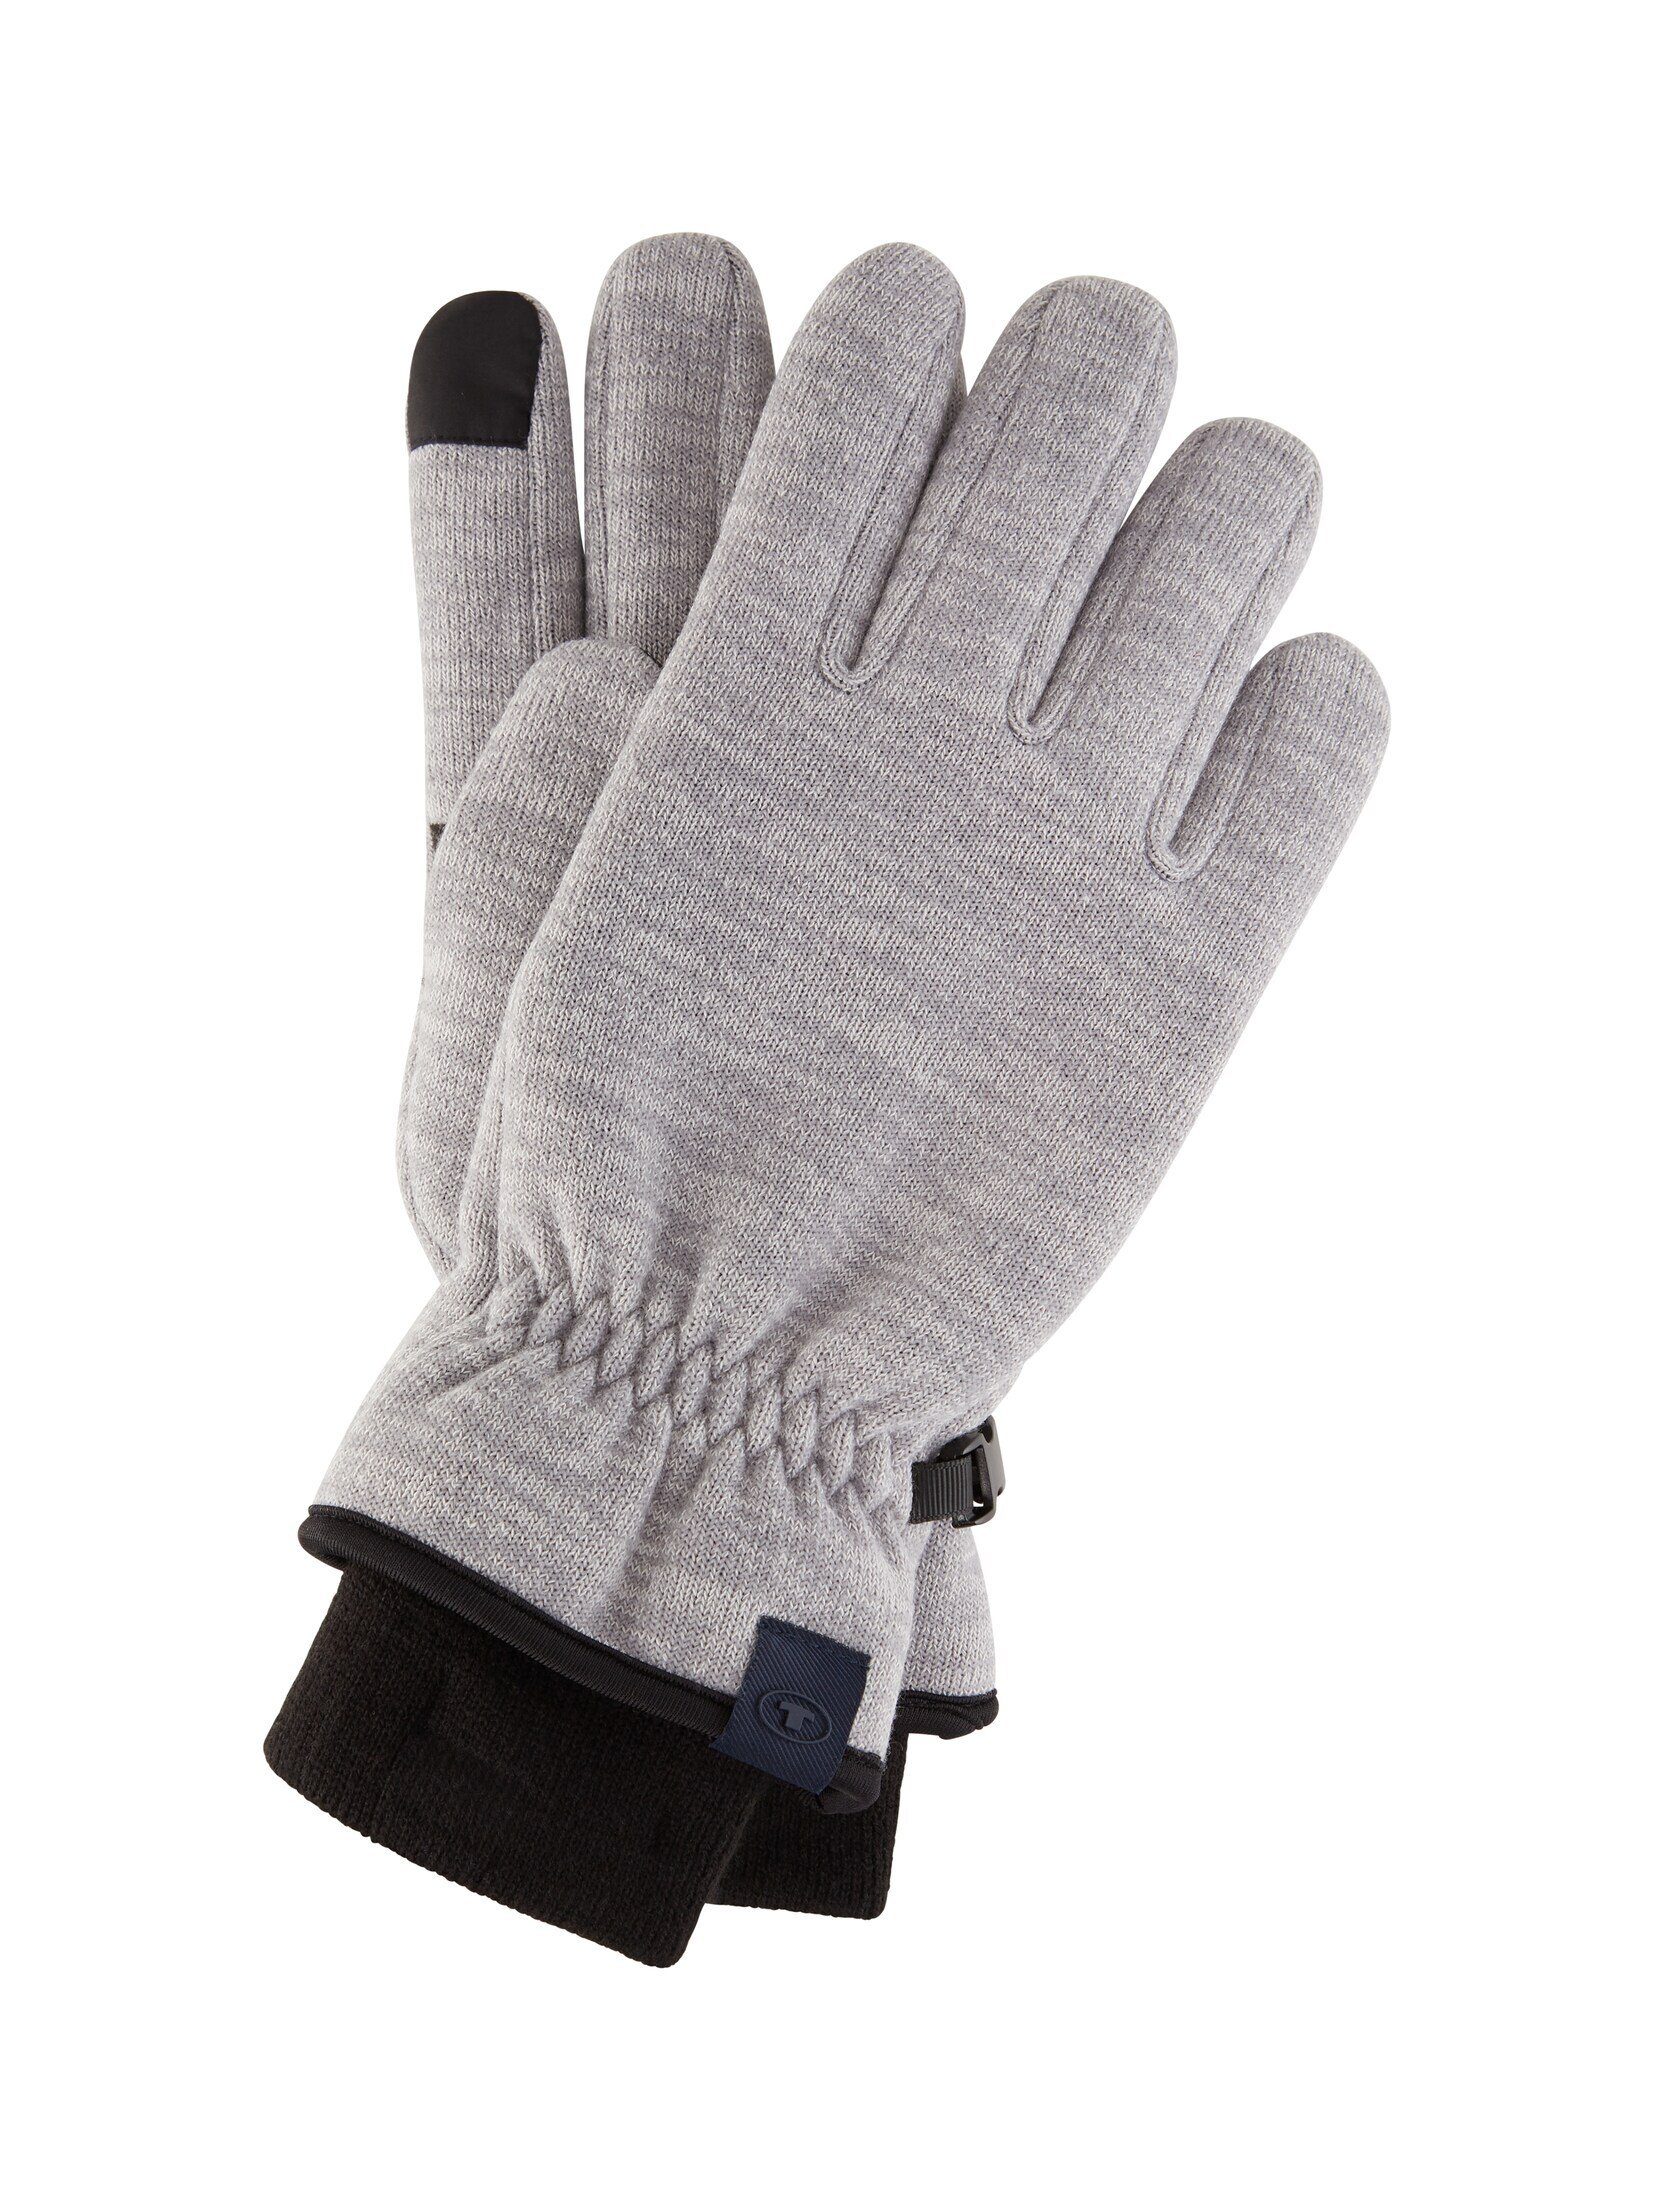 TOM TAILOR Lederhandschuhe Handschuhe in Melange Optik Grey Heather Melange